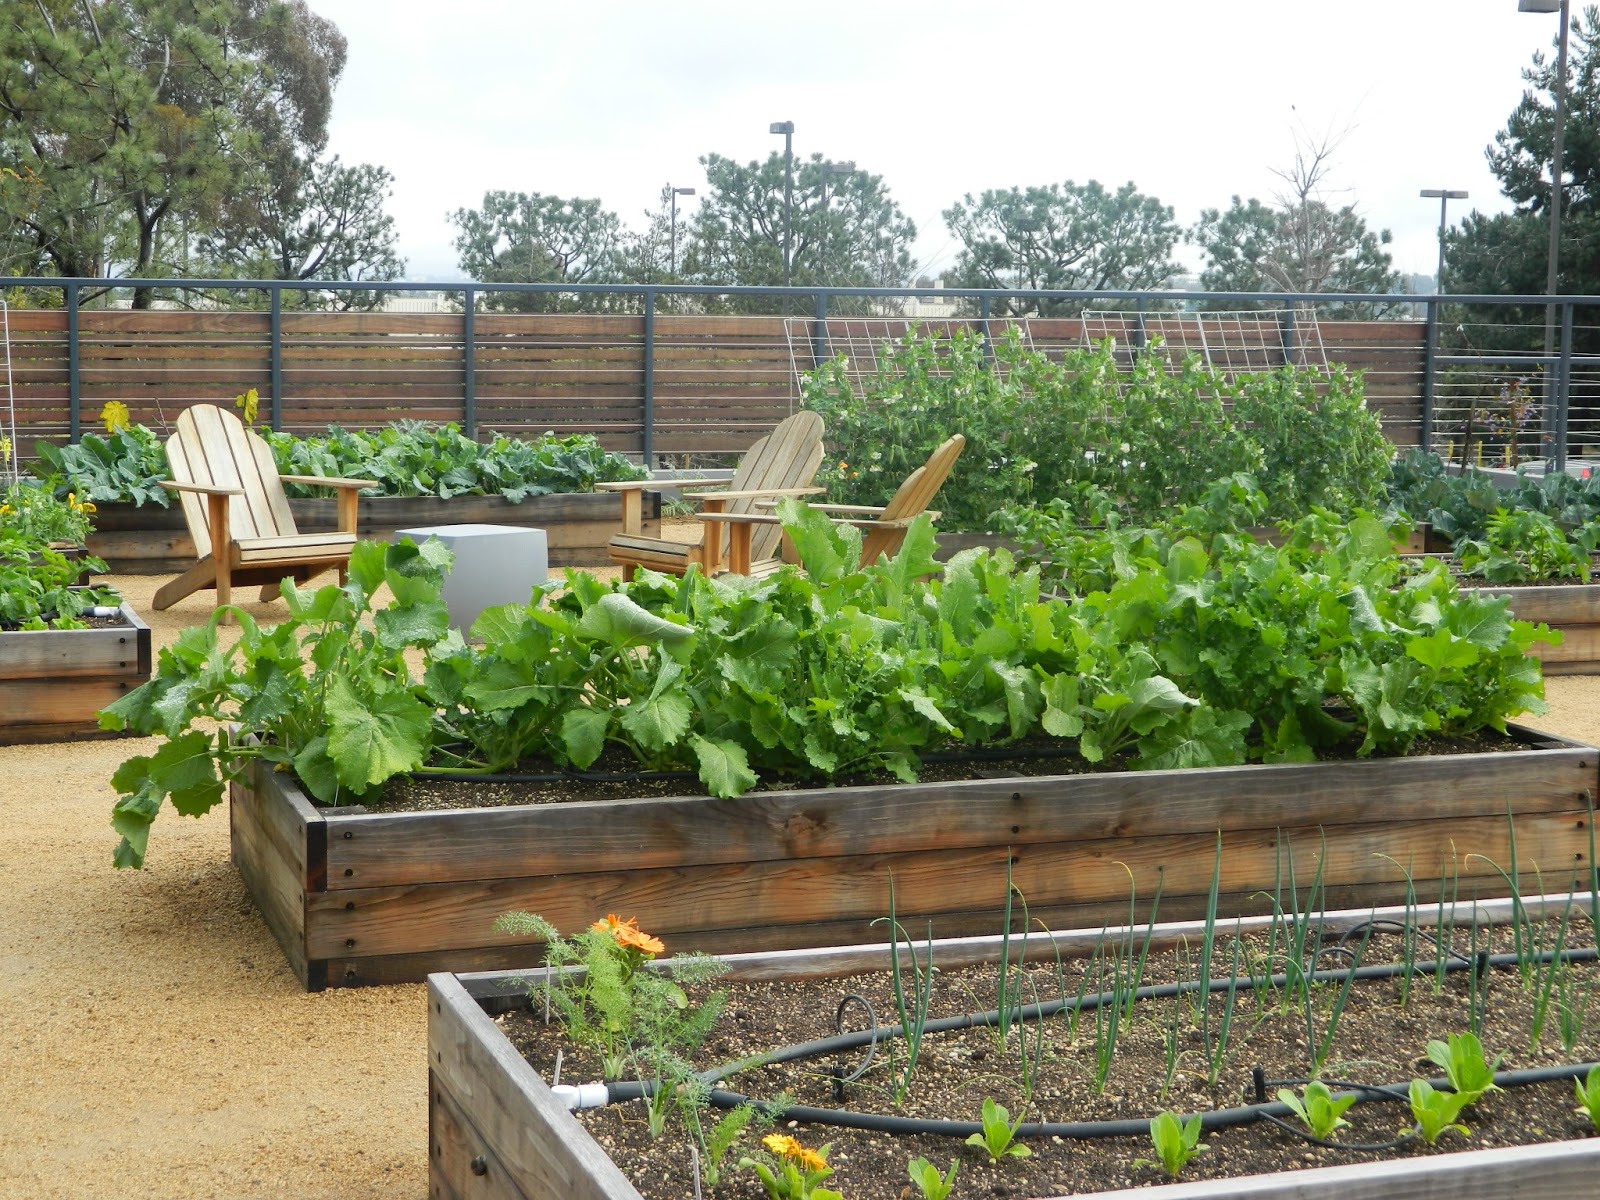 GardenEnvy: Corporate Edible Garden Works For Employees